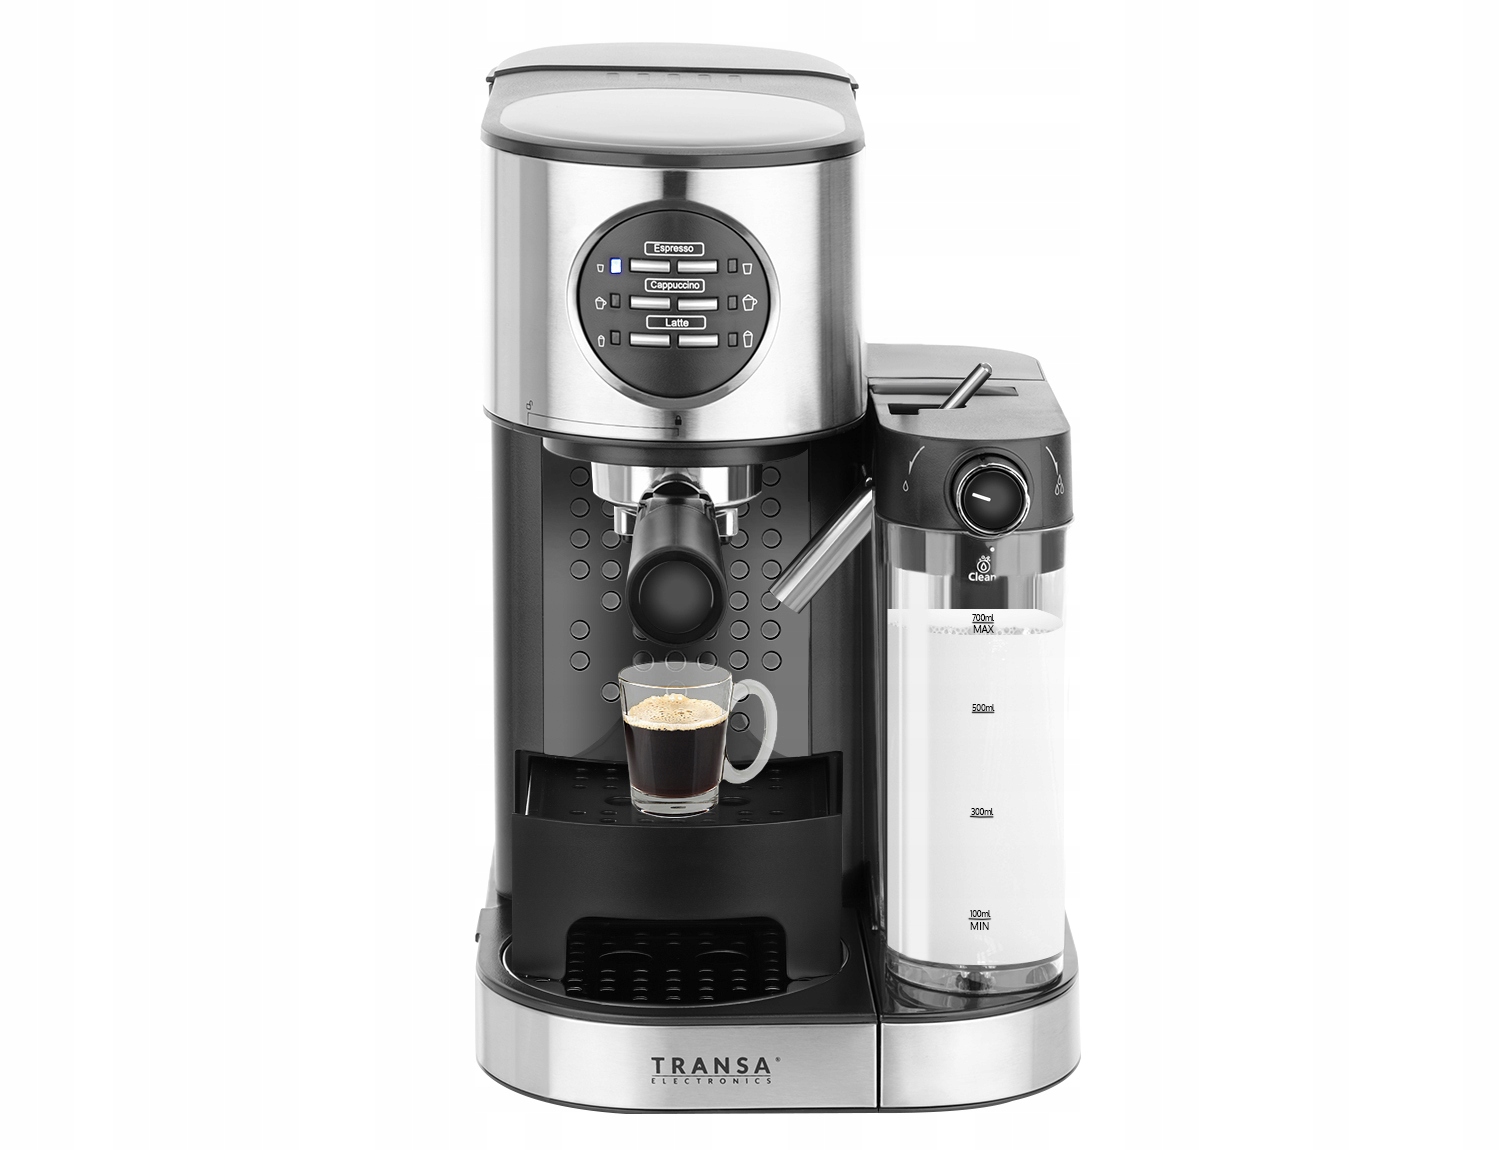 PRESSURE kohvimasin 1470W 15bar Fother Espresso masina tüüp